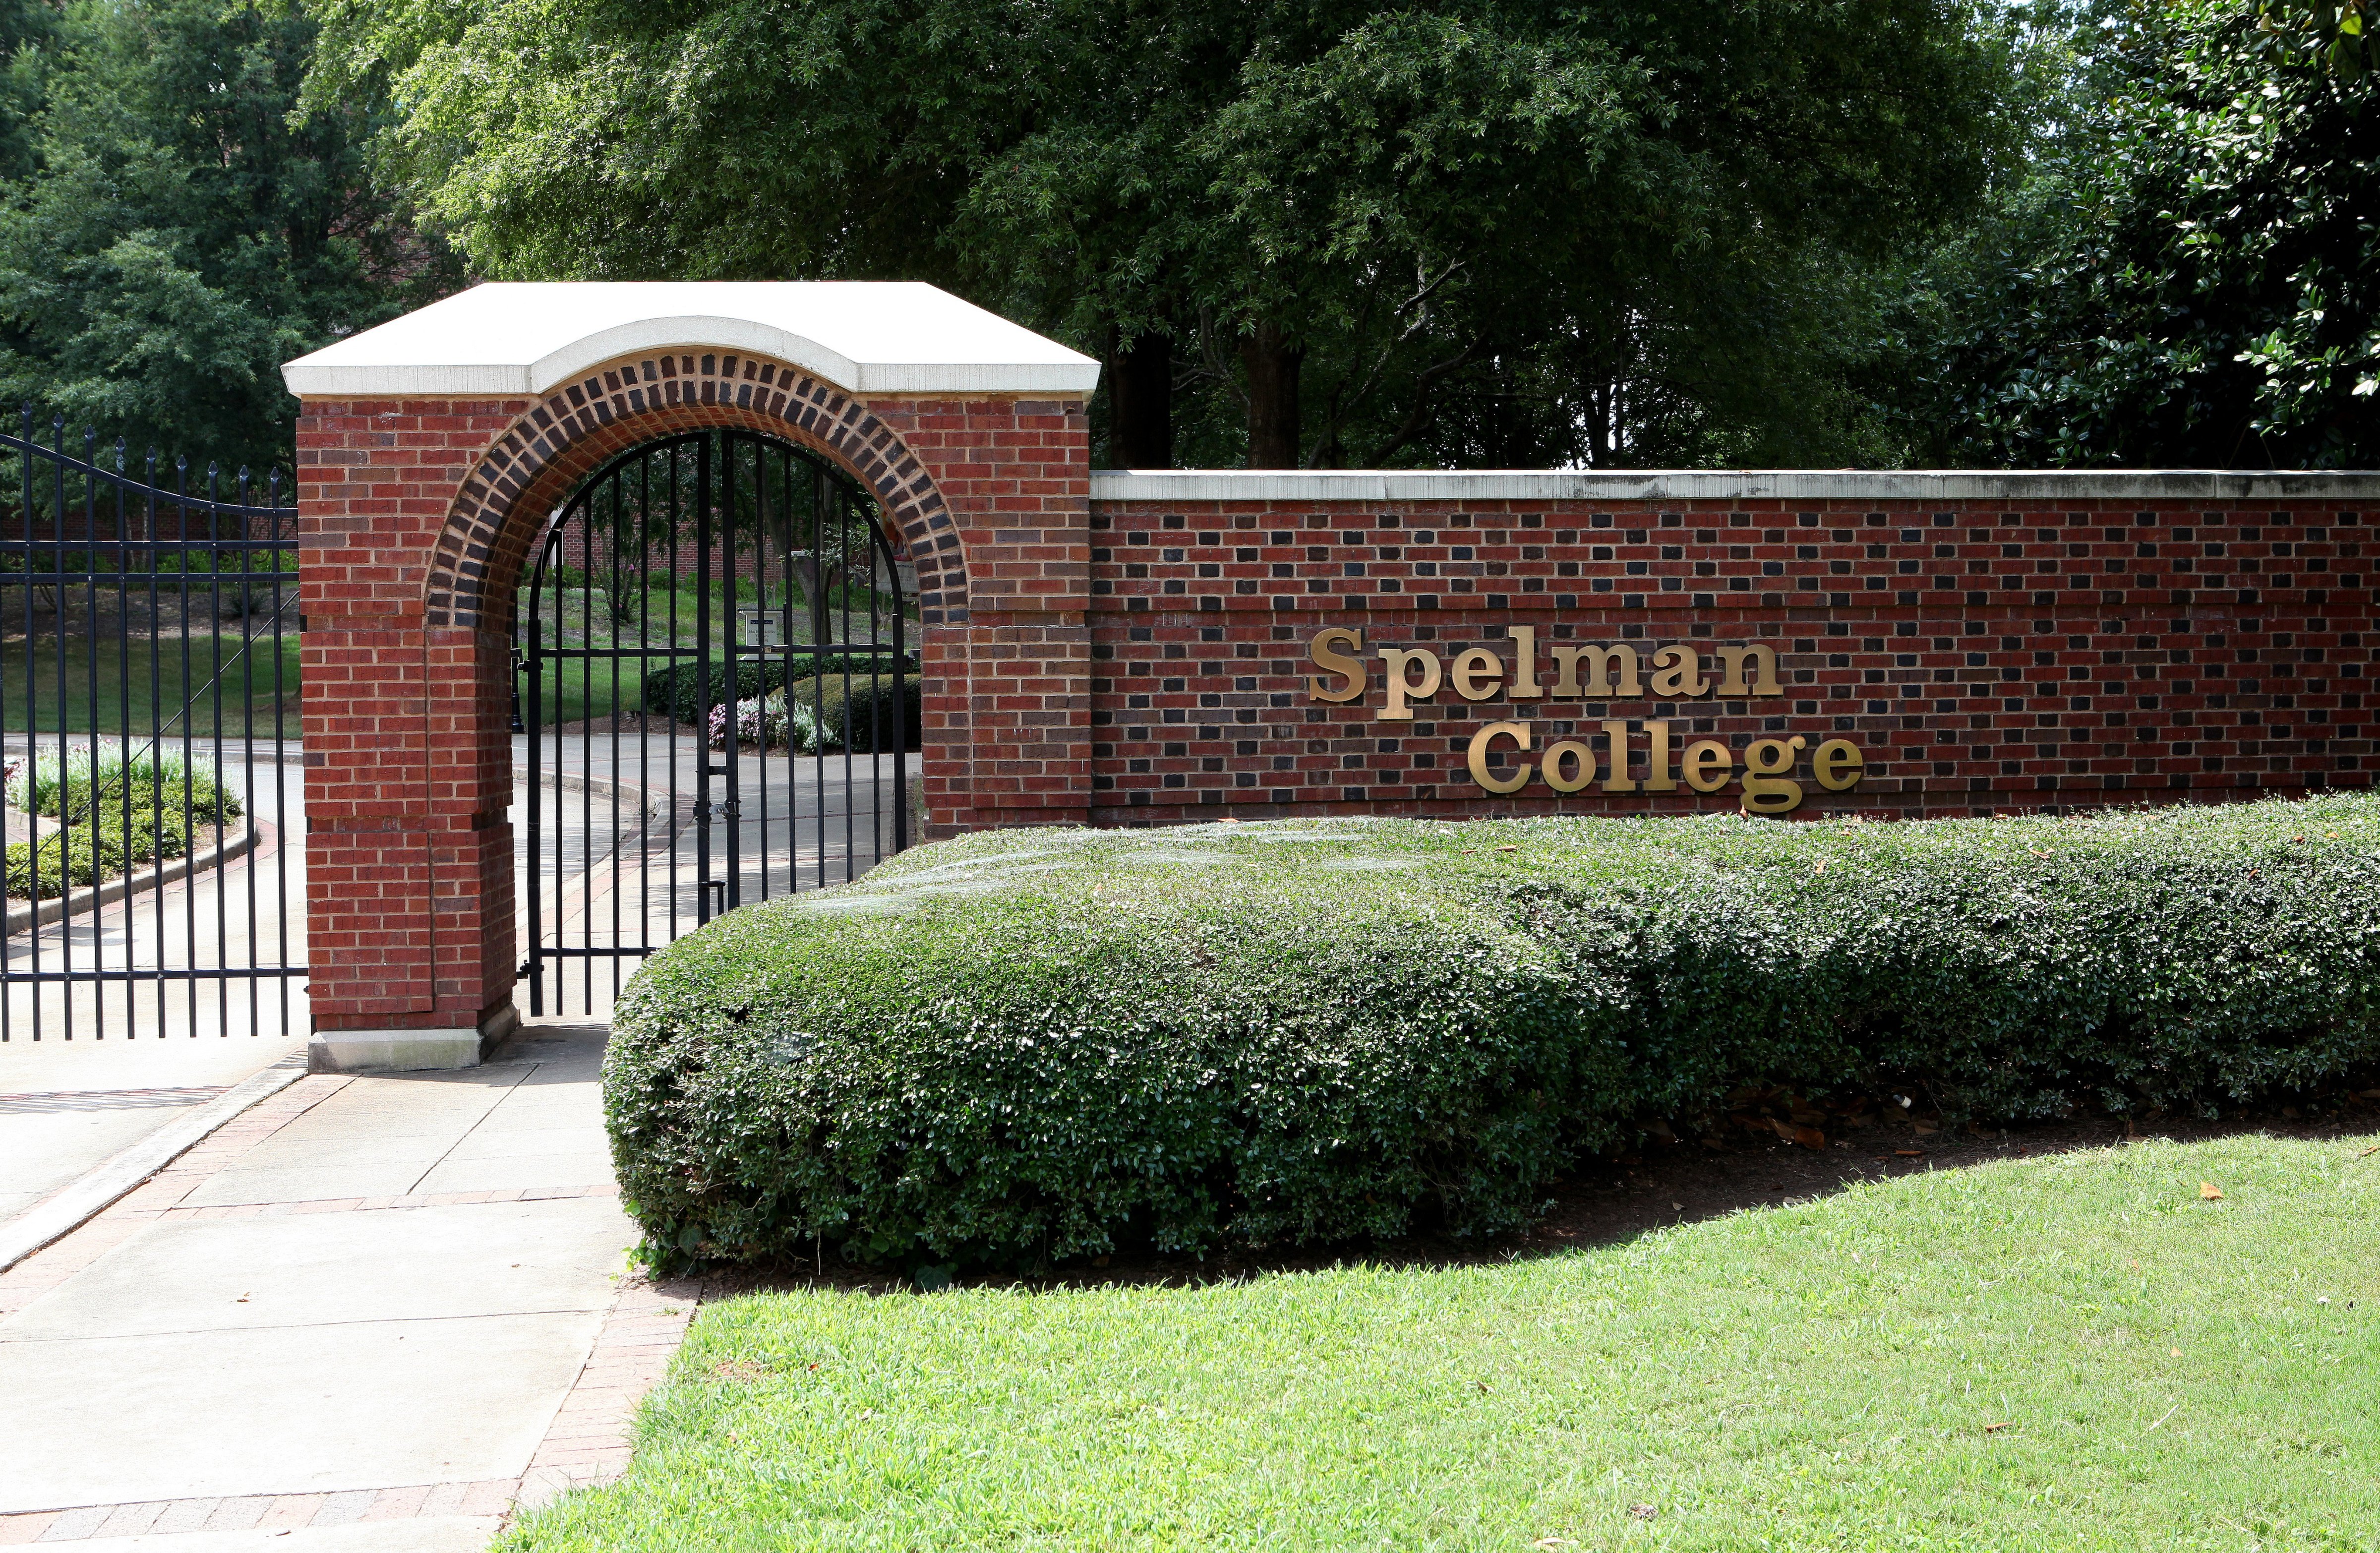 Spelman College's gate is seen on July 18, 2015 in Atlanta, Georgia. (Raymond Boyd/Getty Images)